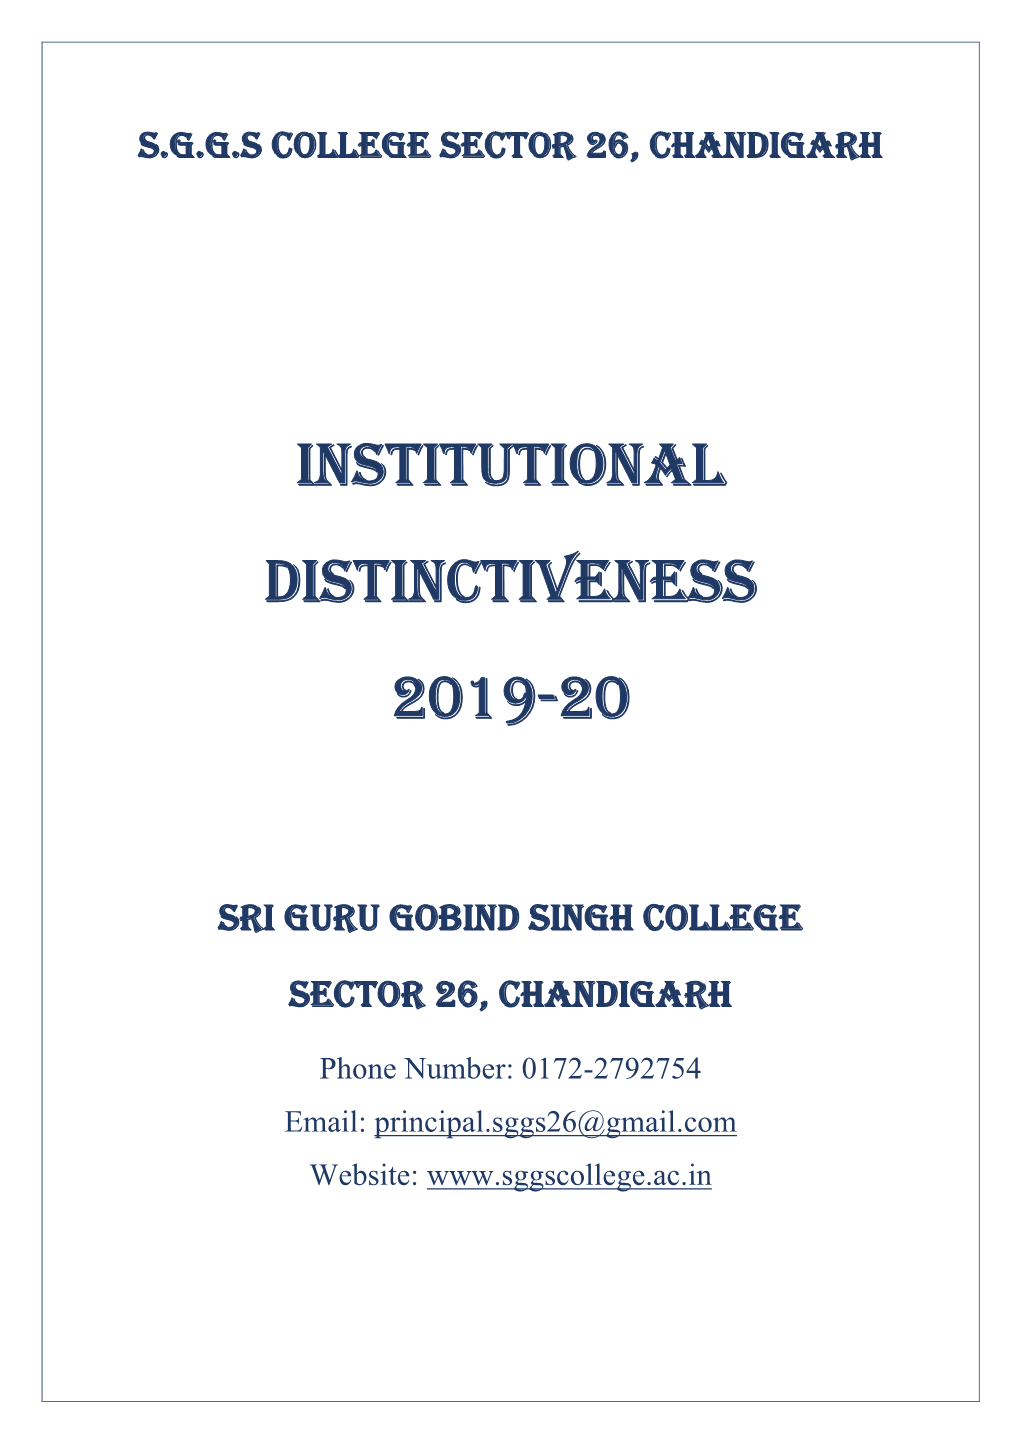 Institutional Distinctiveness 2019-20